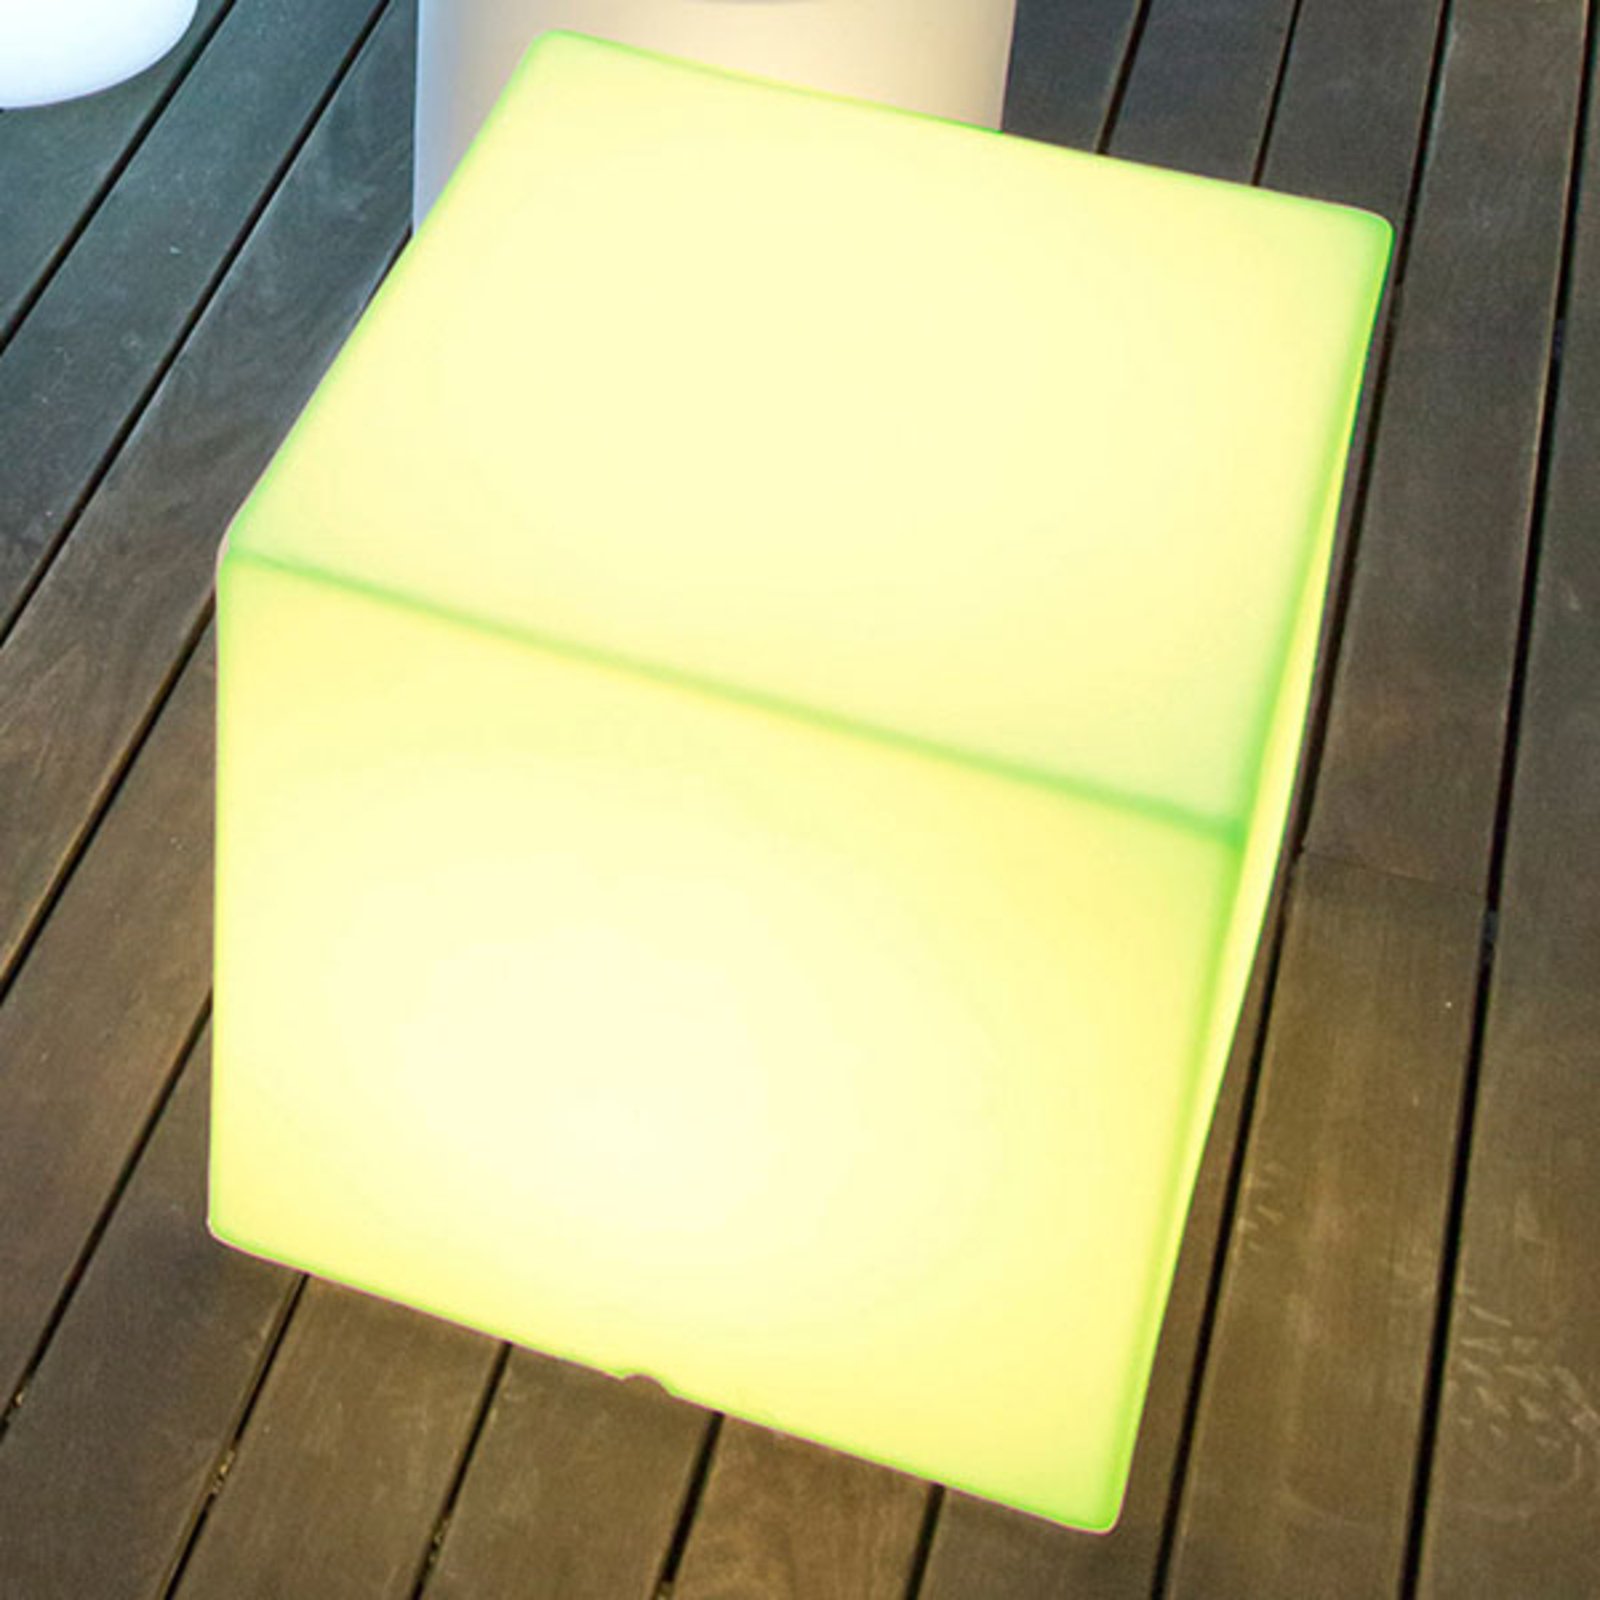 Solárne svetlo Newgarden Cuby cube, výška 53 cm